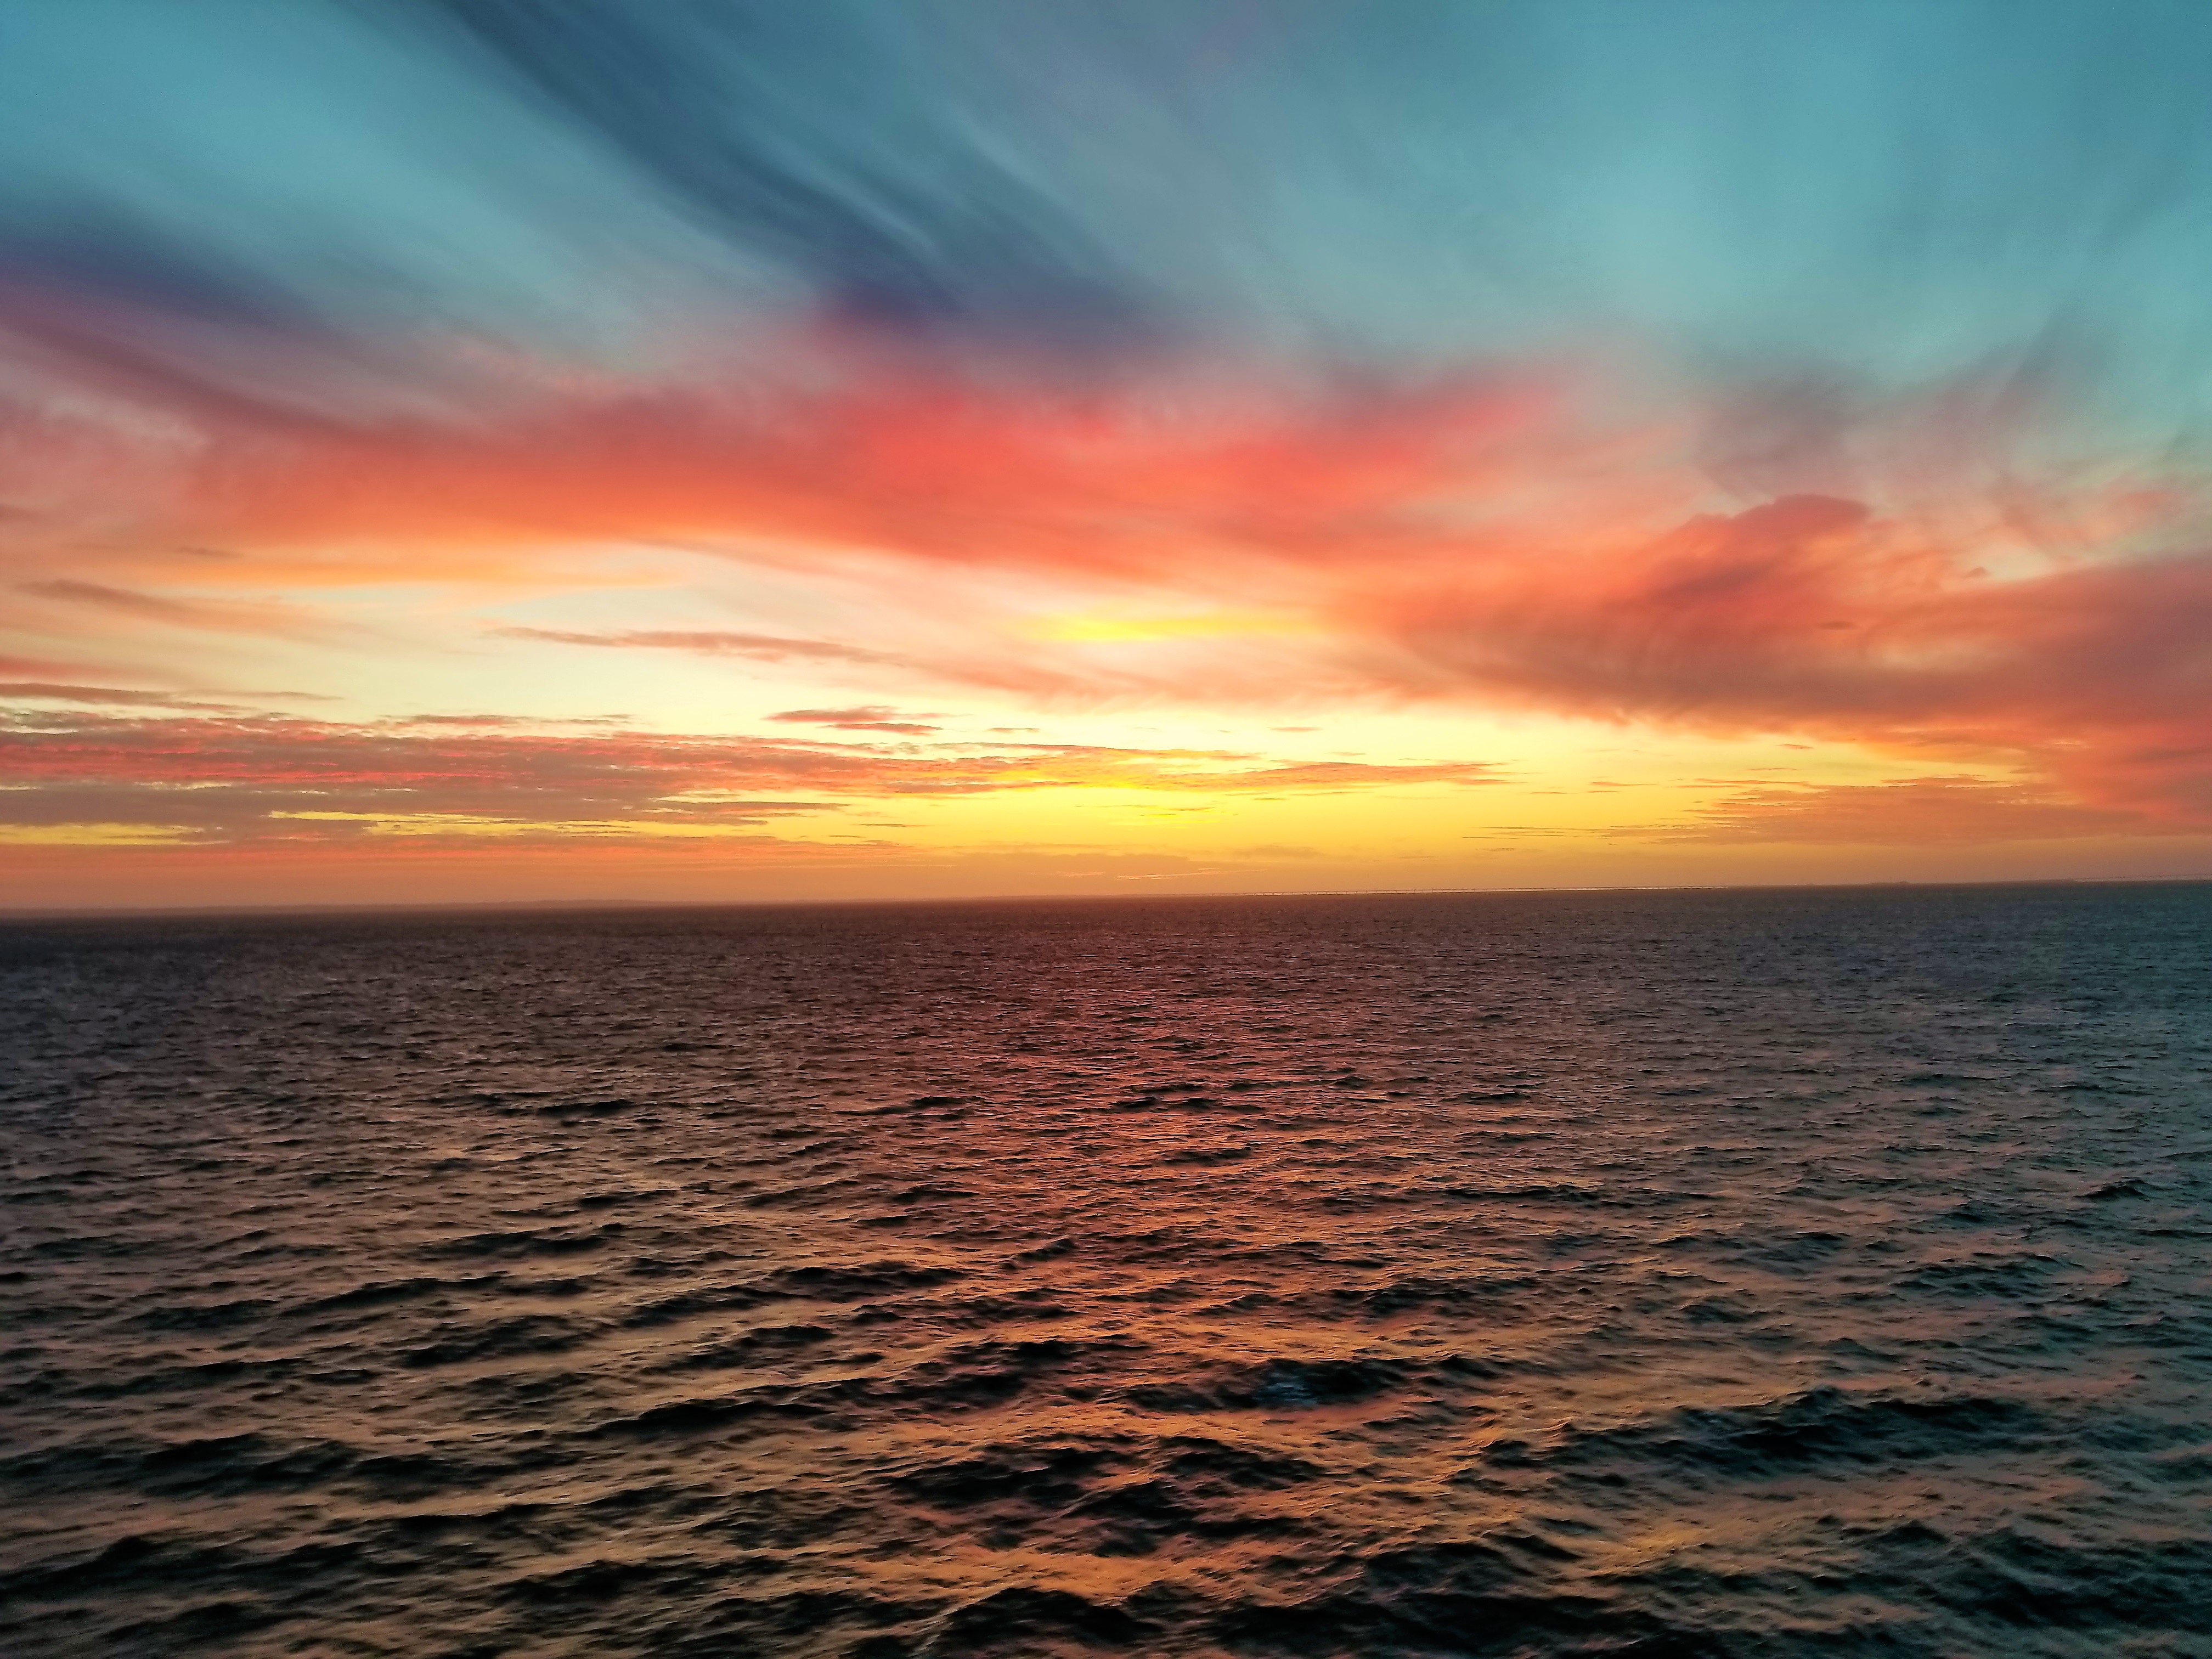 Sunset Cruising away from Kiel Germany